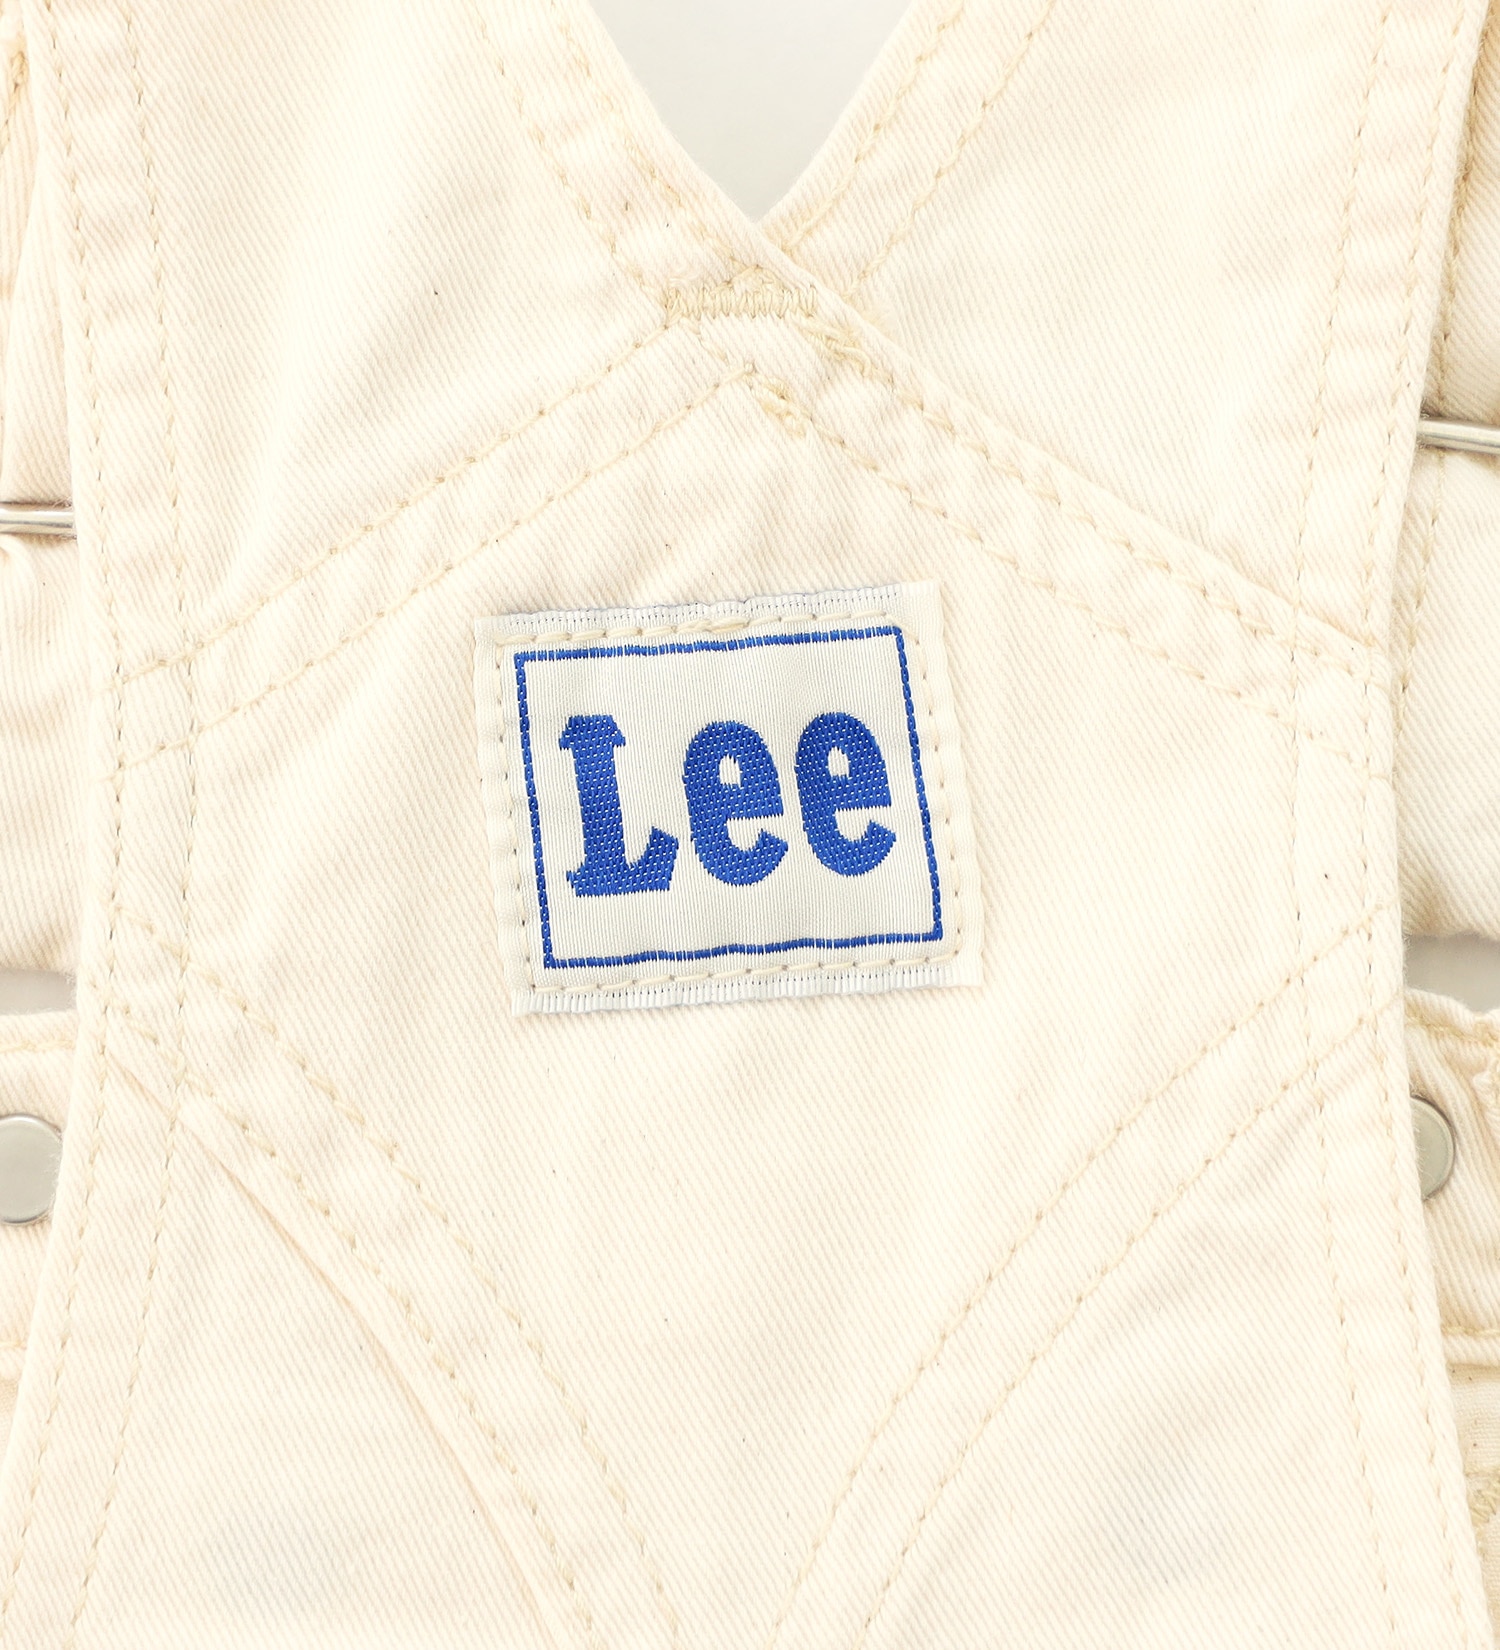 Lee(リー)の【110/120cm】キッズ ジャンパースカート|オールインワン/ジャンパースカート/キッズ|アイボリー